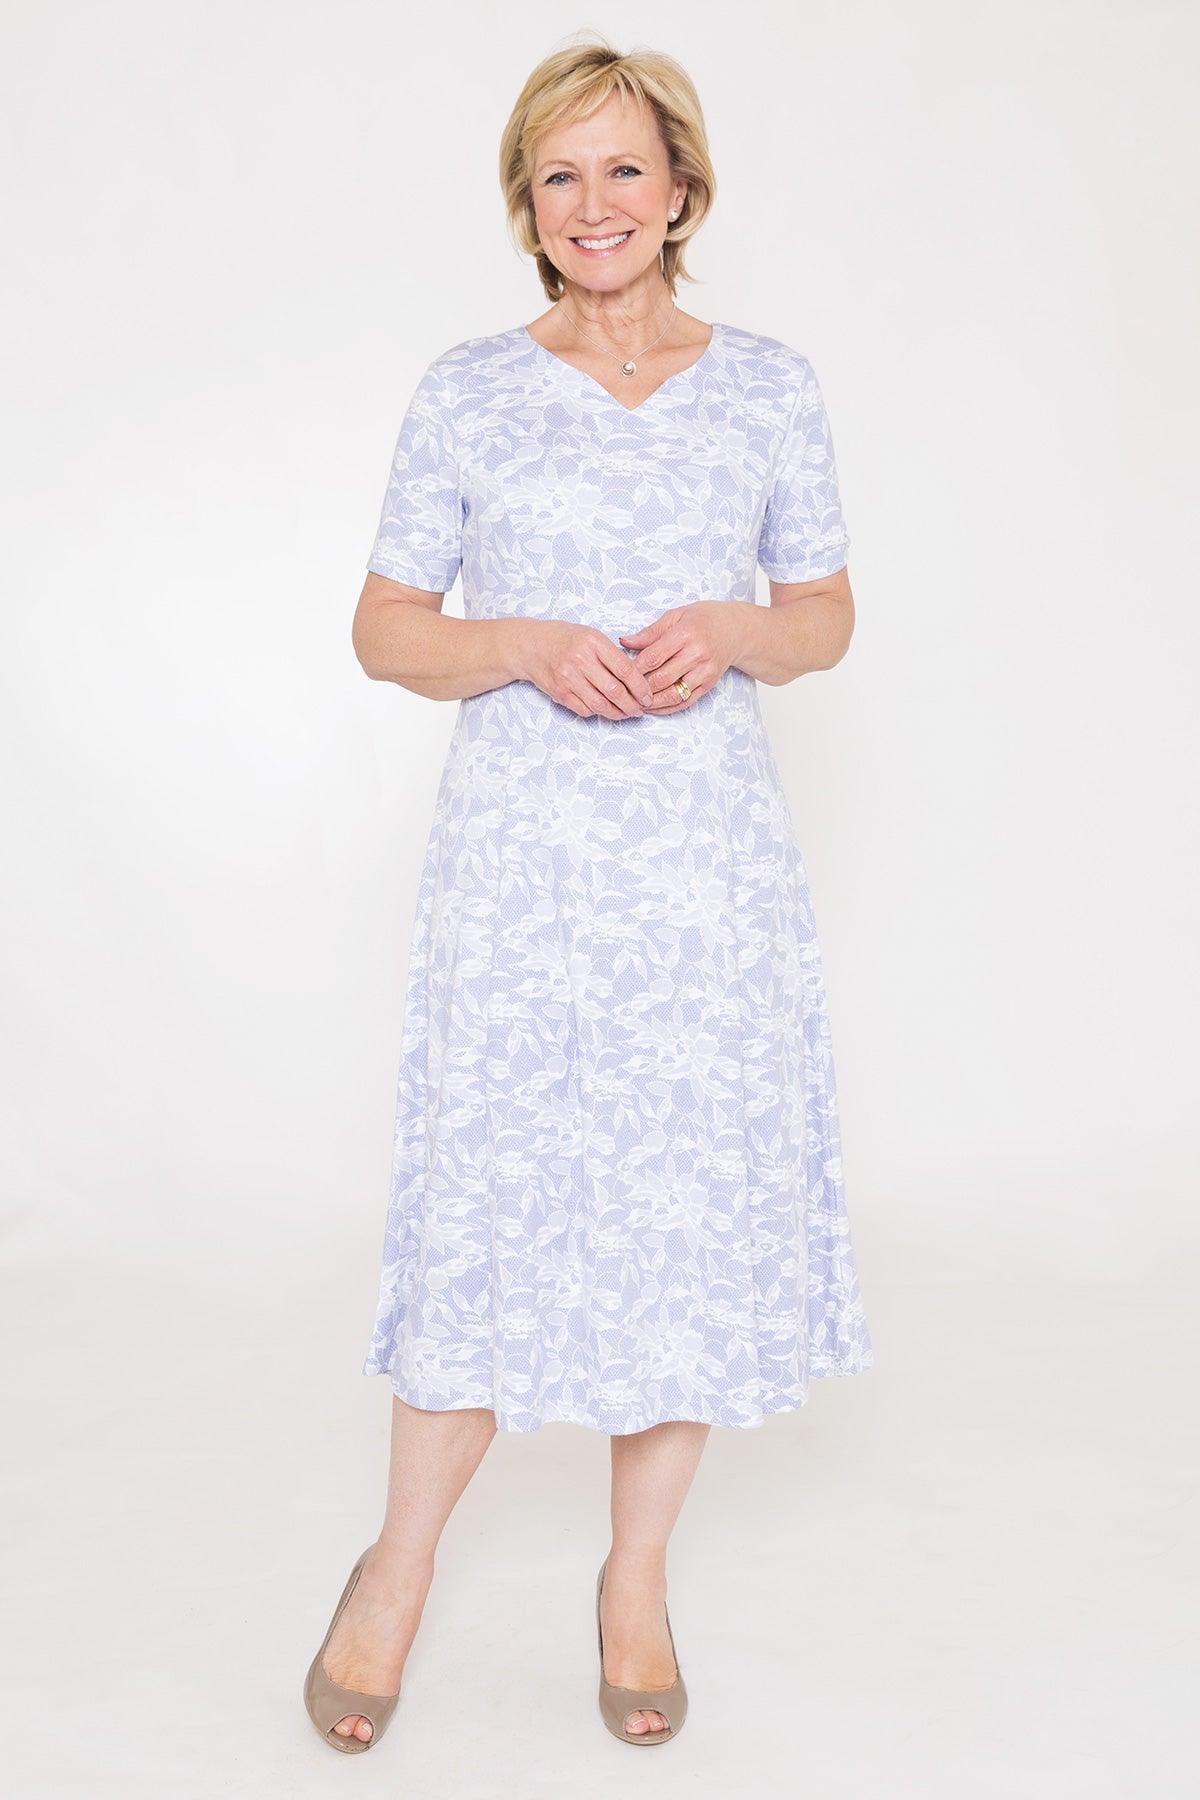 Lace Print Dress - Carr & Westley